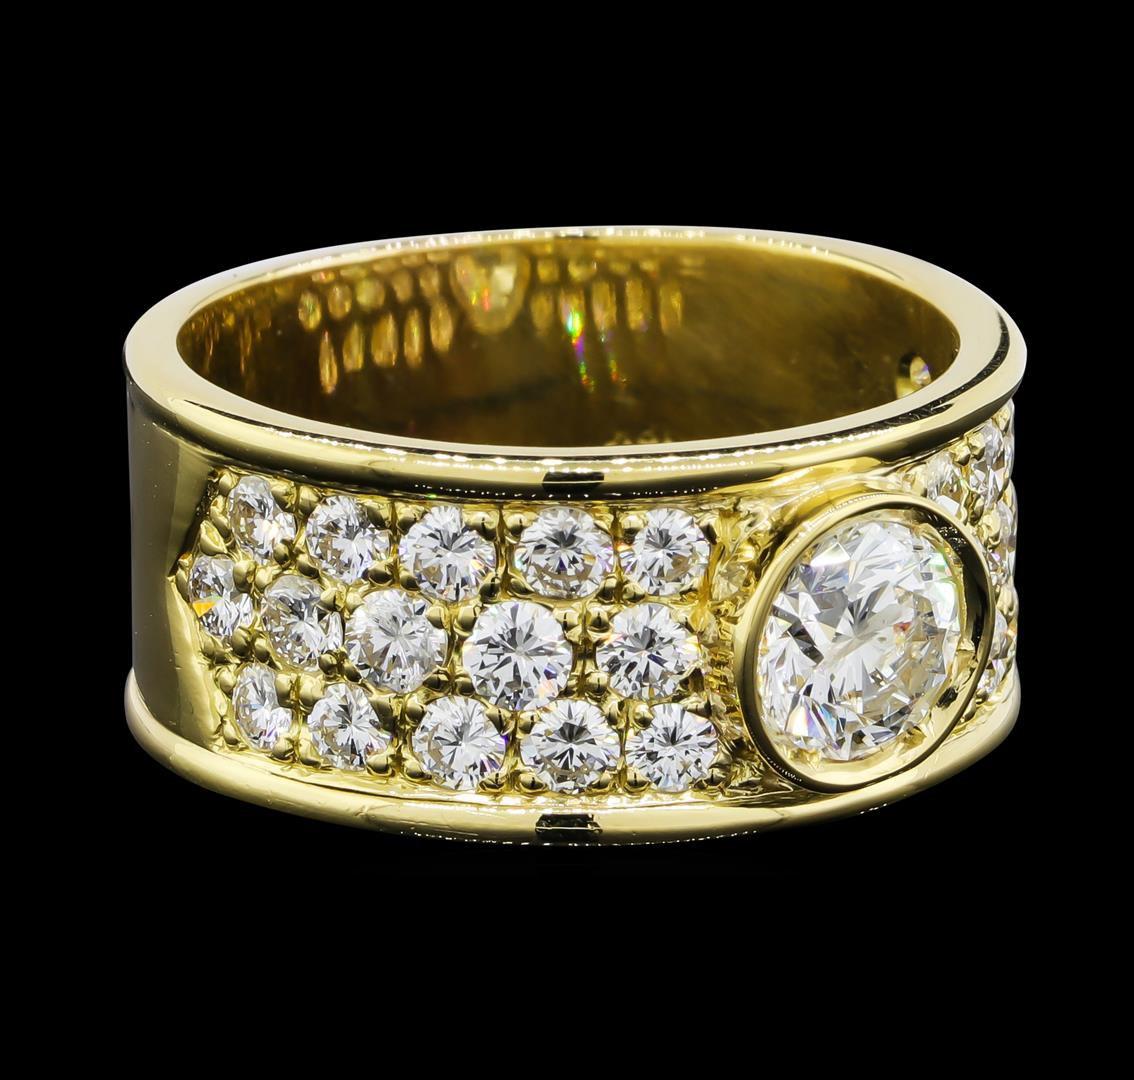 2.66 ctw Diamond Ring - 18KT Yellow Gold